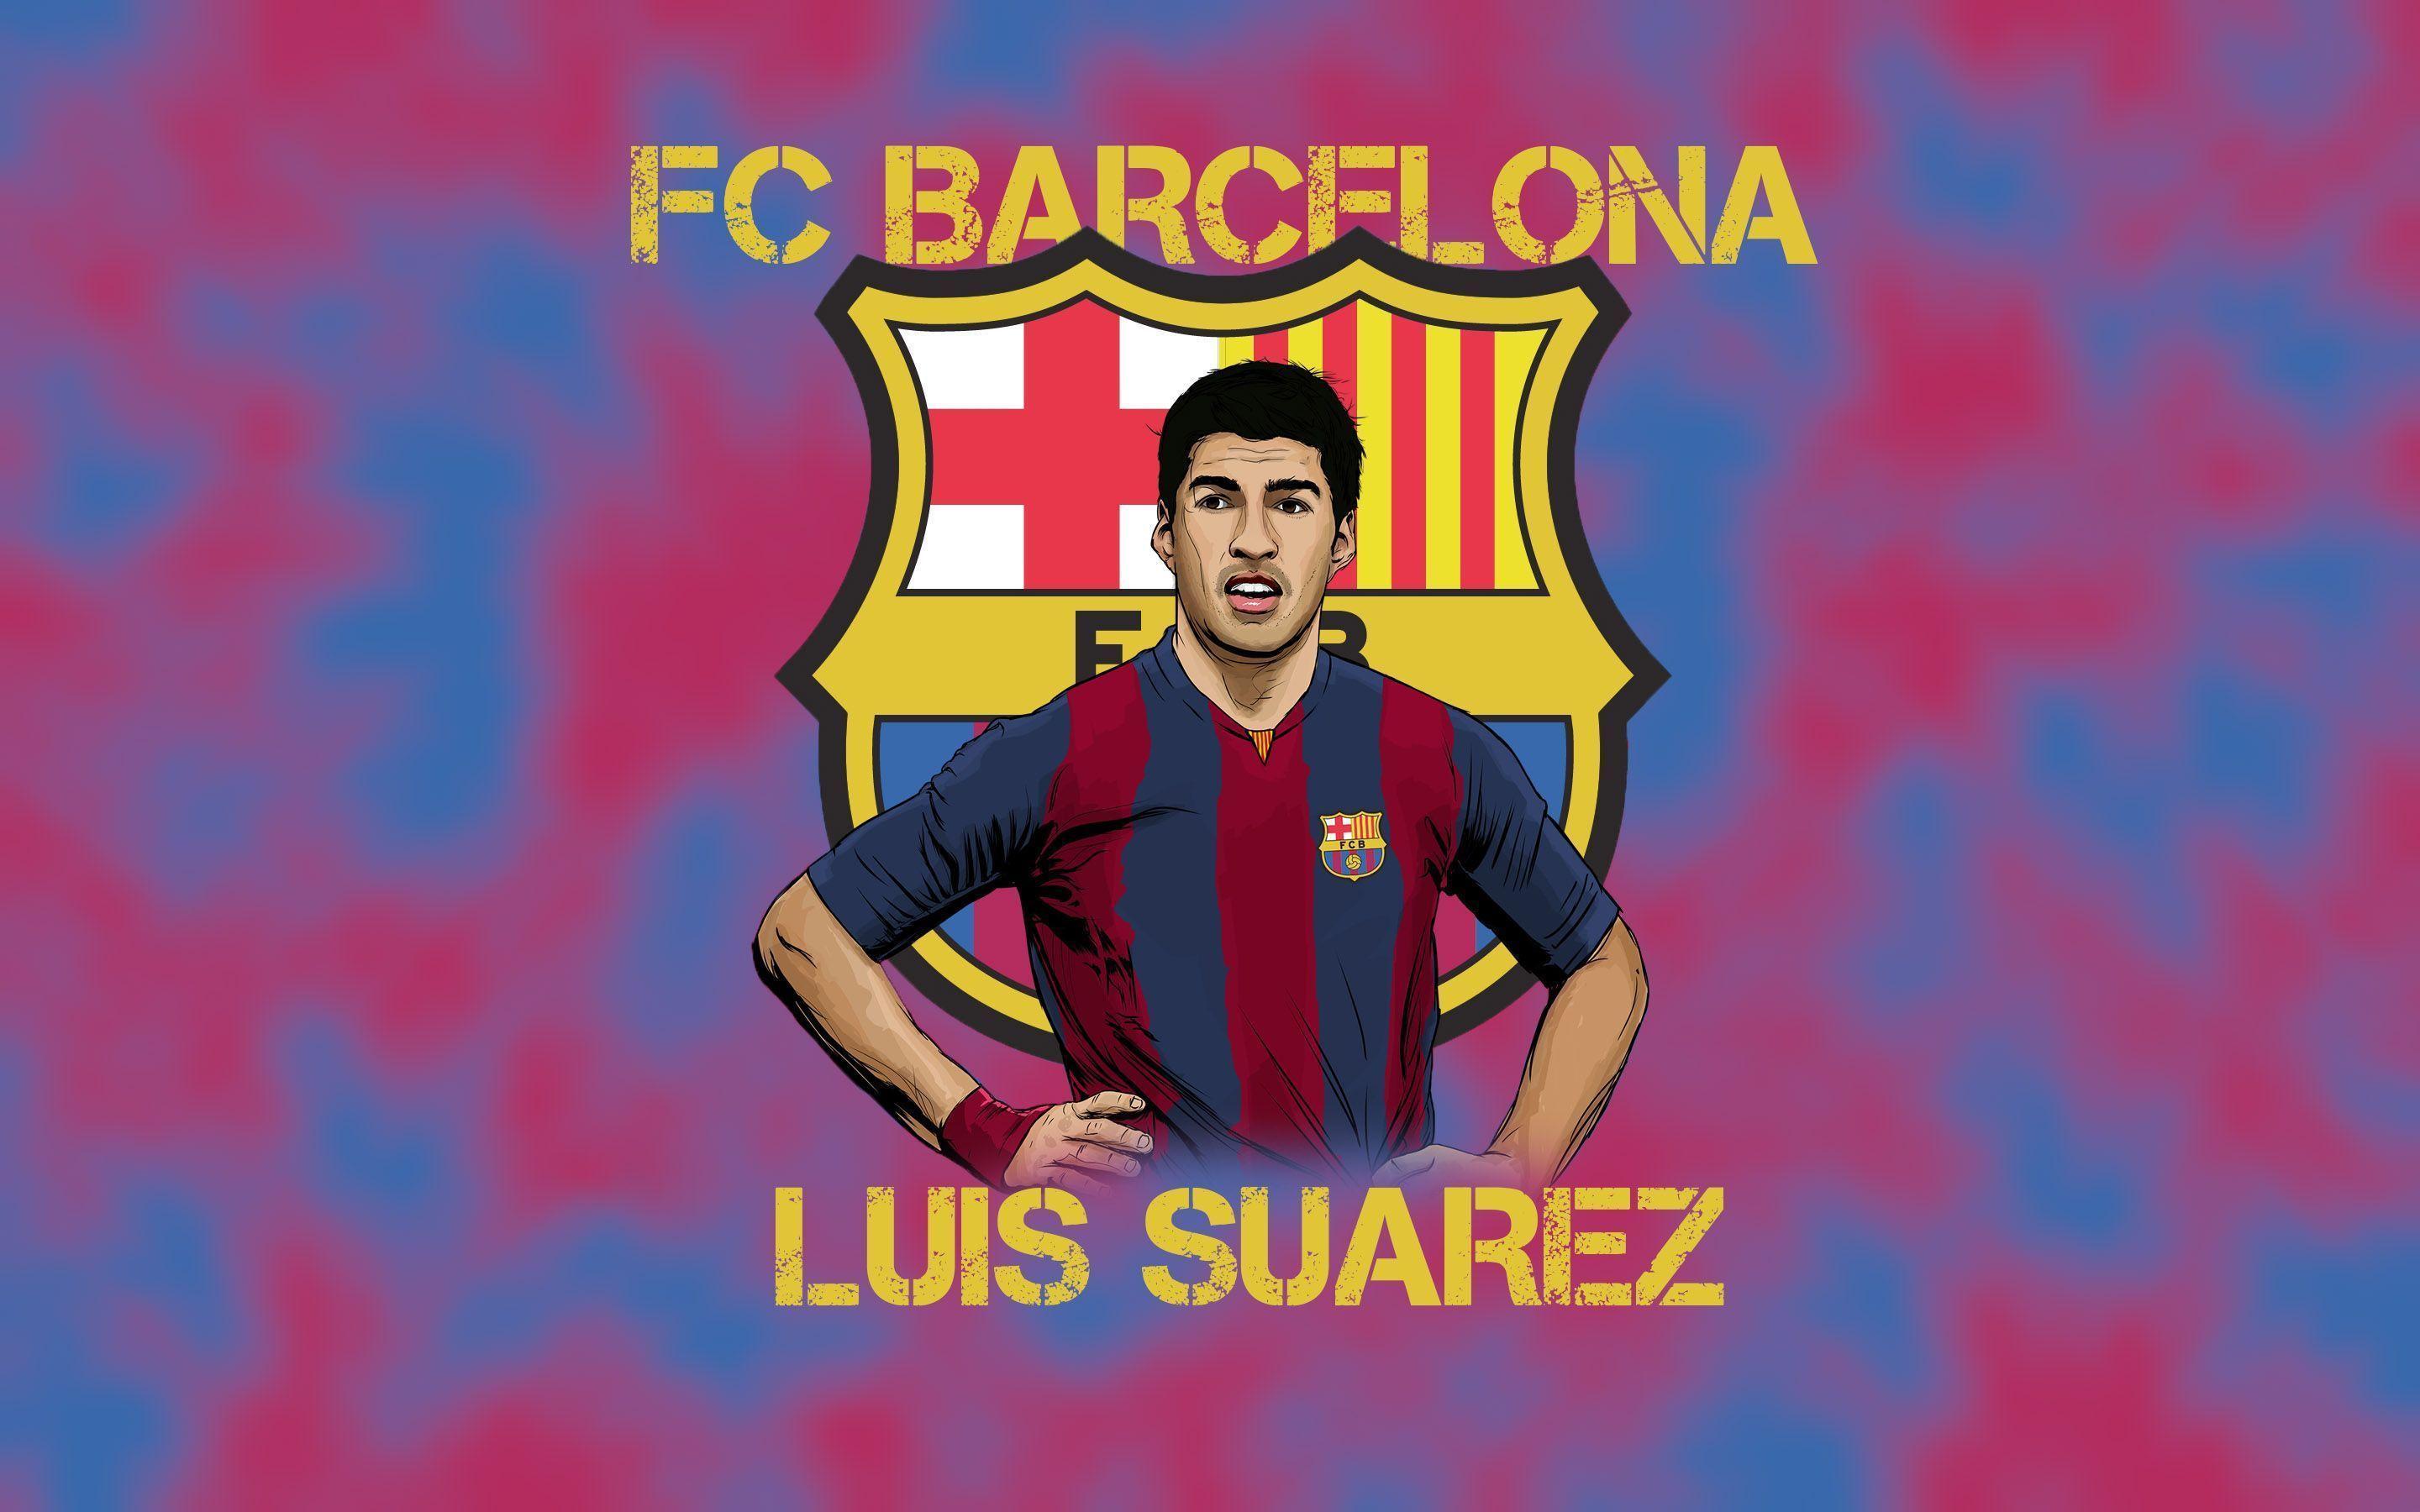 Luis Suarez 2014 FC Barcelona Wallpaper Wide or HD. Male